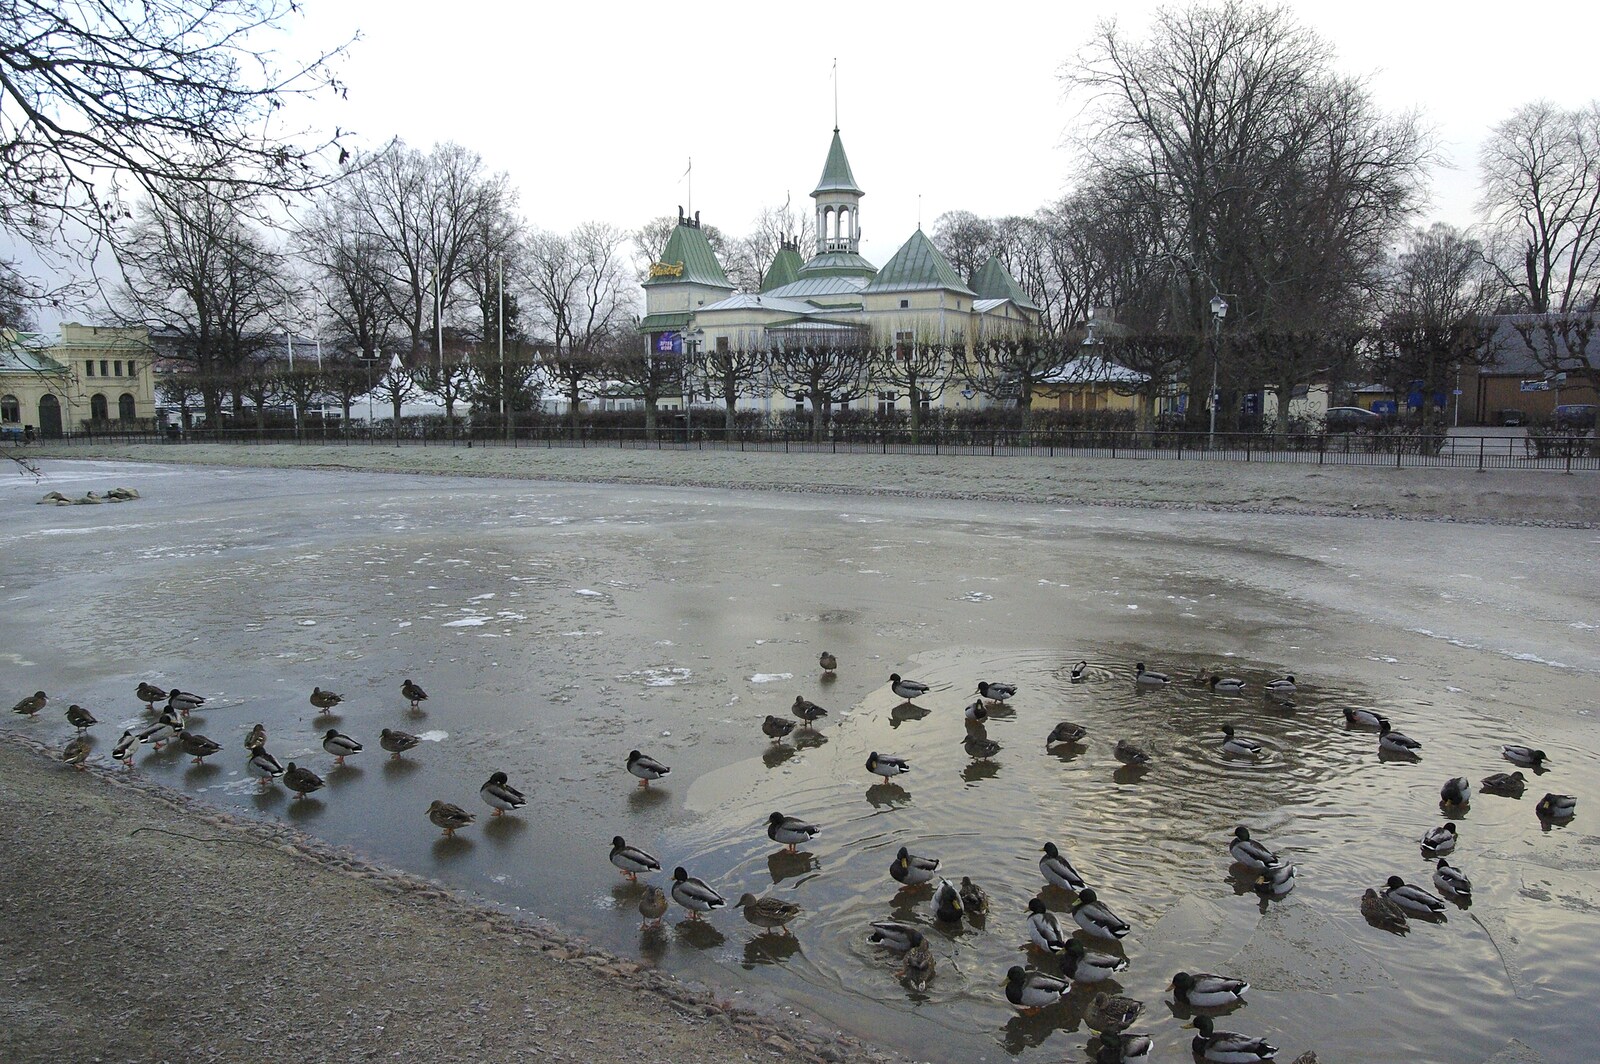 Ducks on a frozen pond from Gamla Uppsala, Uppsala County, Sweden - 16th December 2007